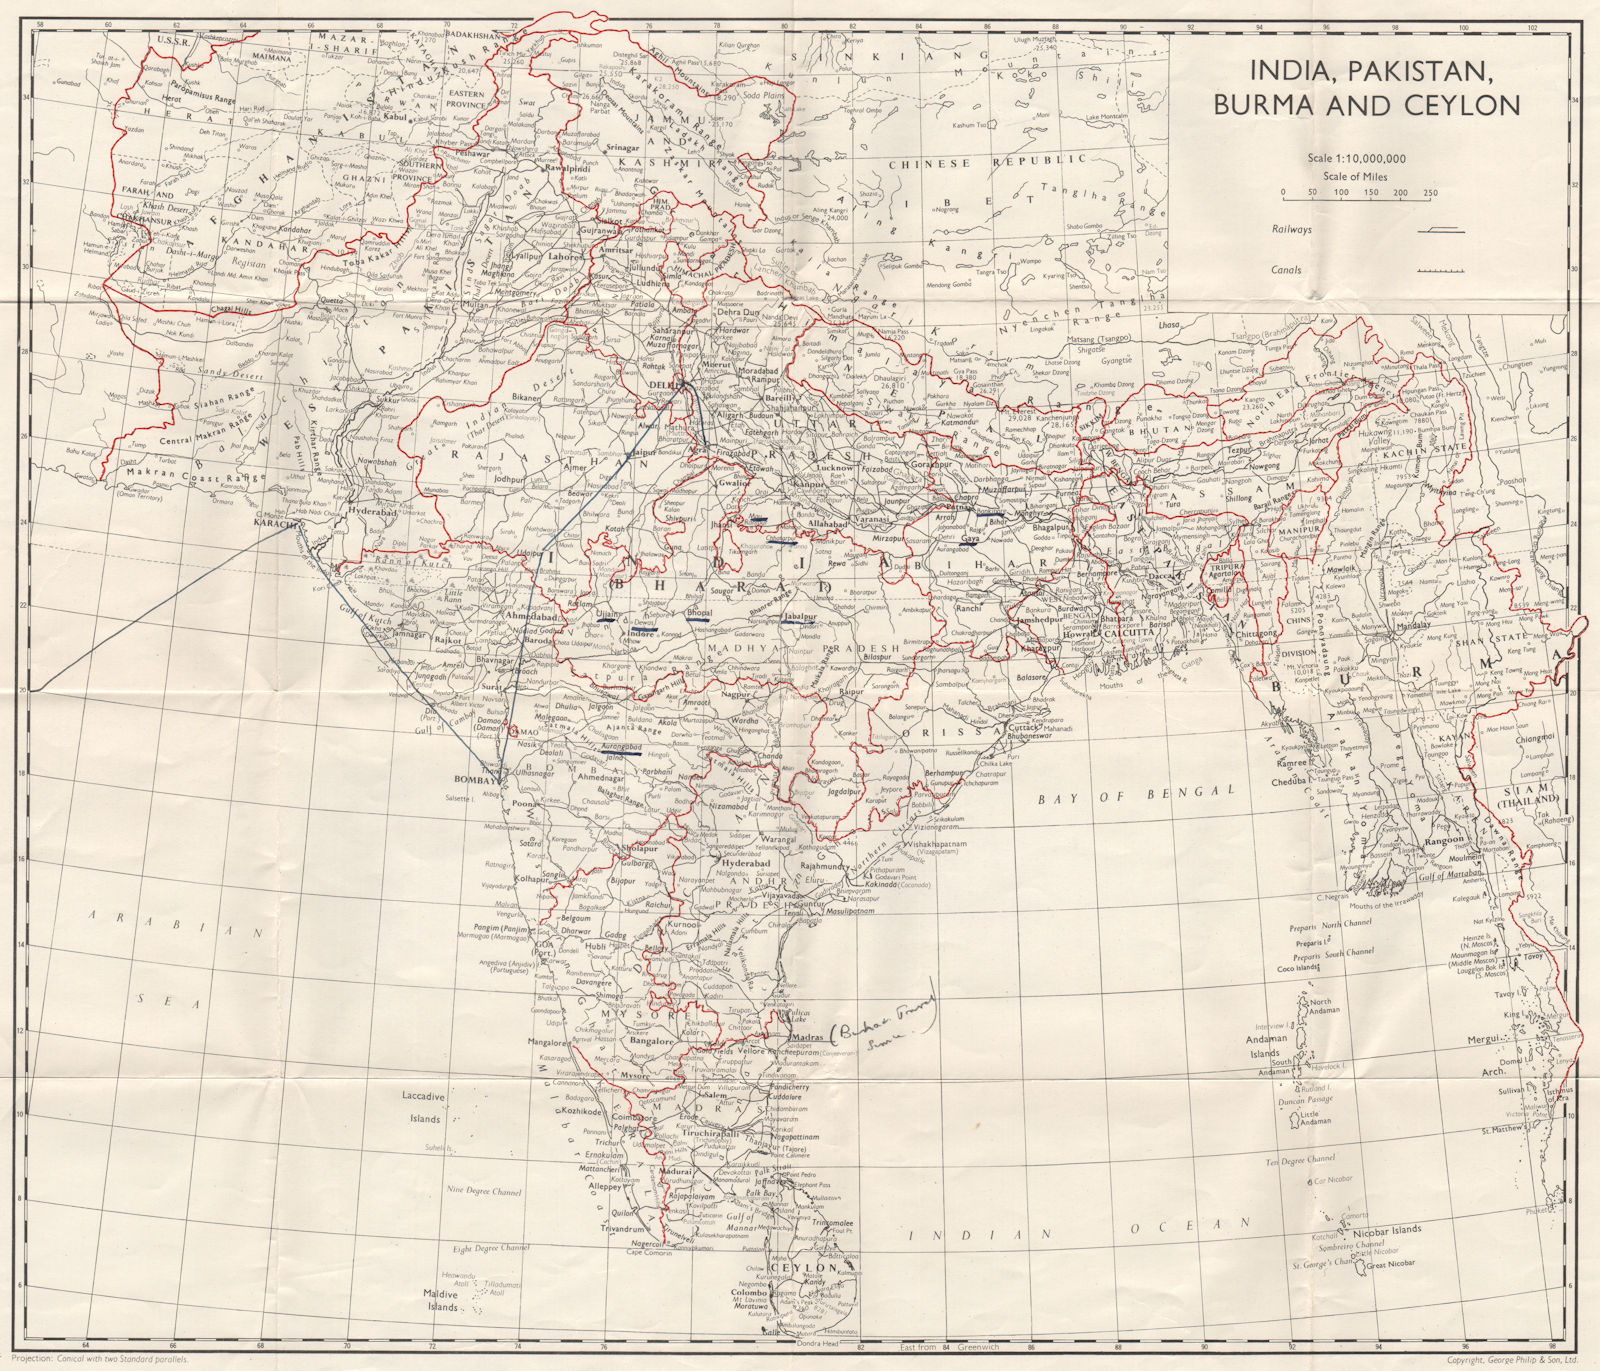 SOUTH ASIA. India Pakistan Burma & Ceylon 1965 old vintage map plan chart